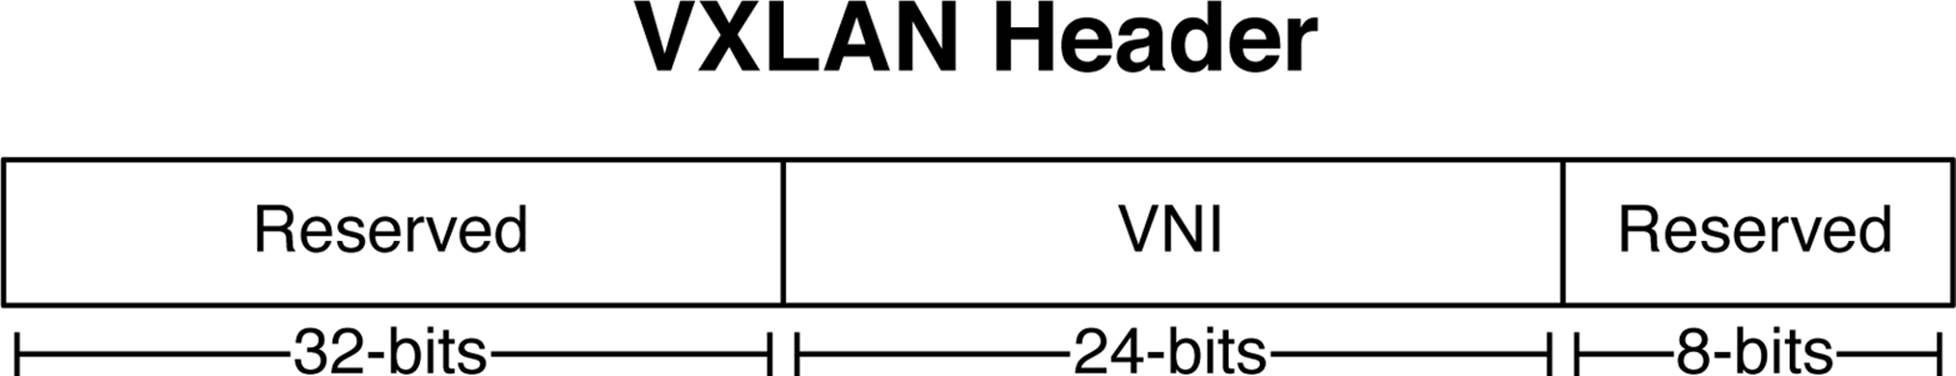 A VXLAN header